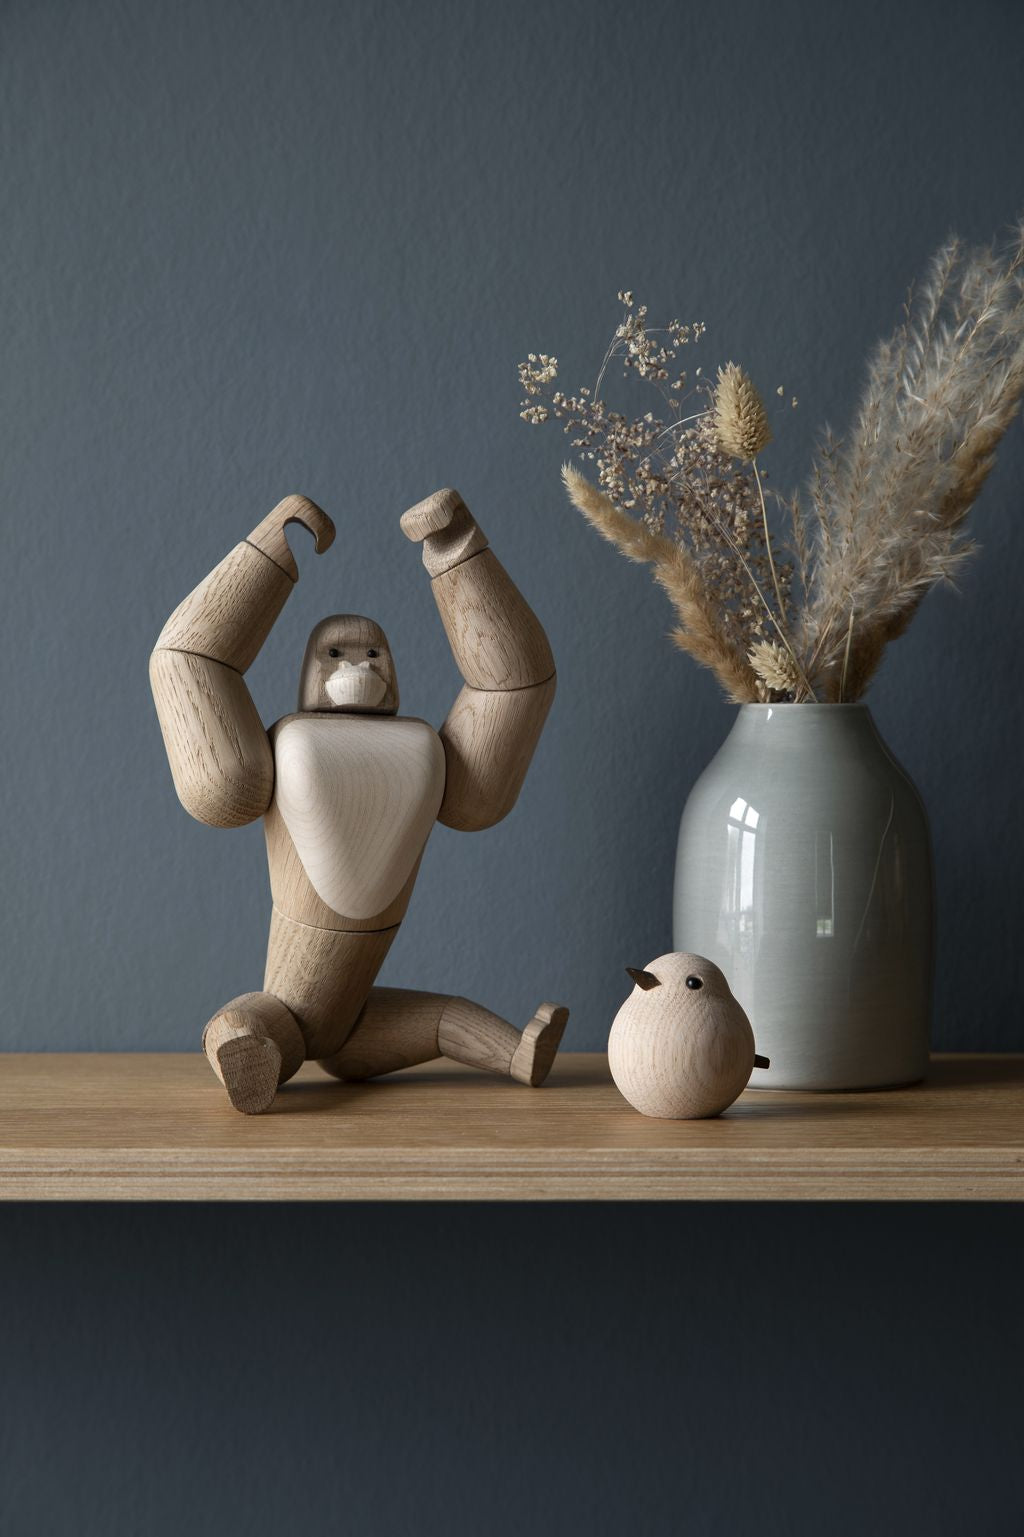 Novoform Design Gorilla Decoration Figur